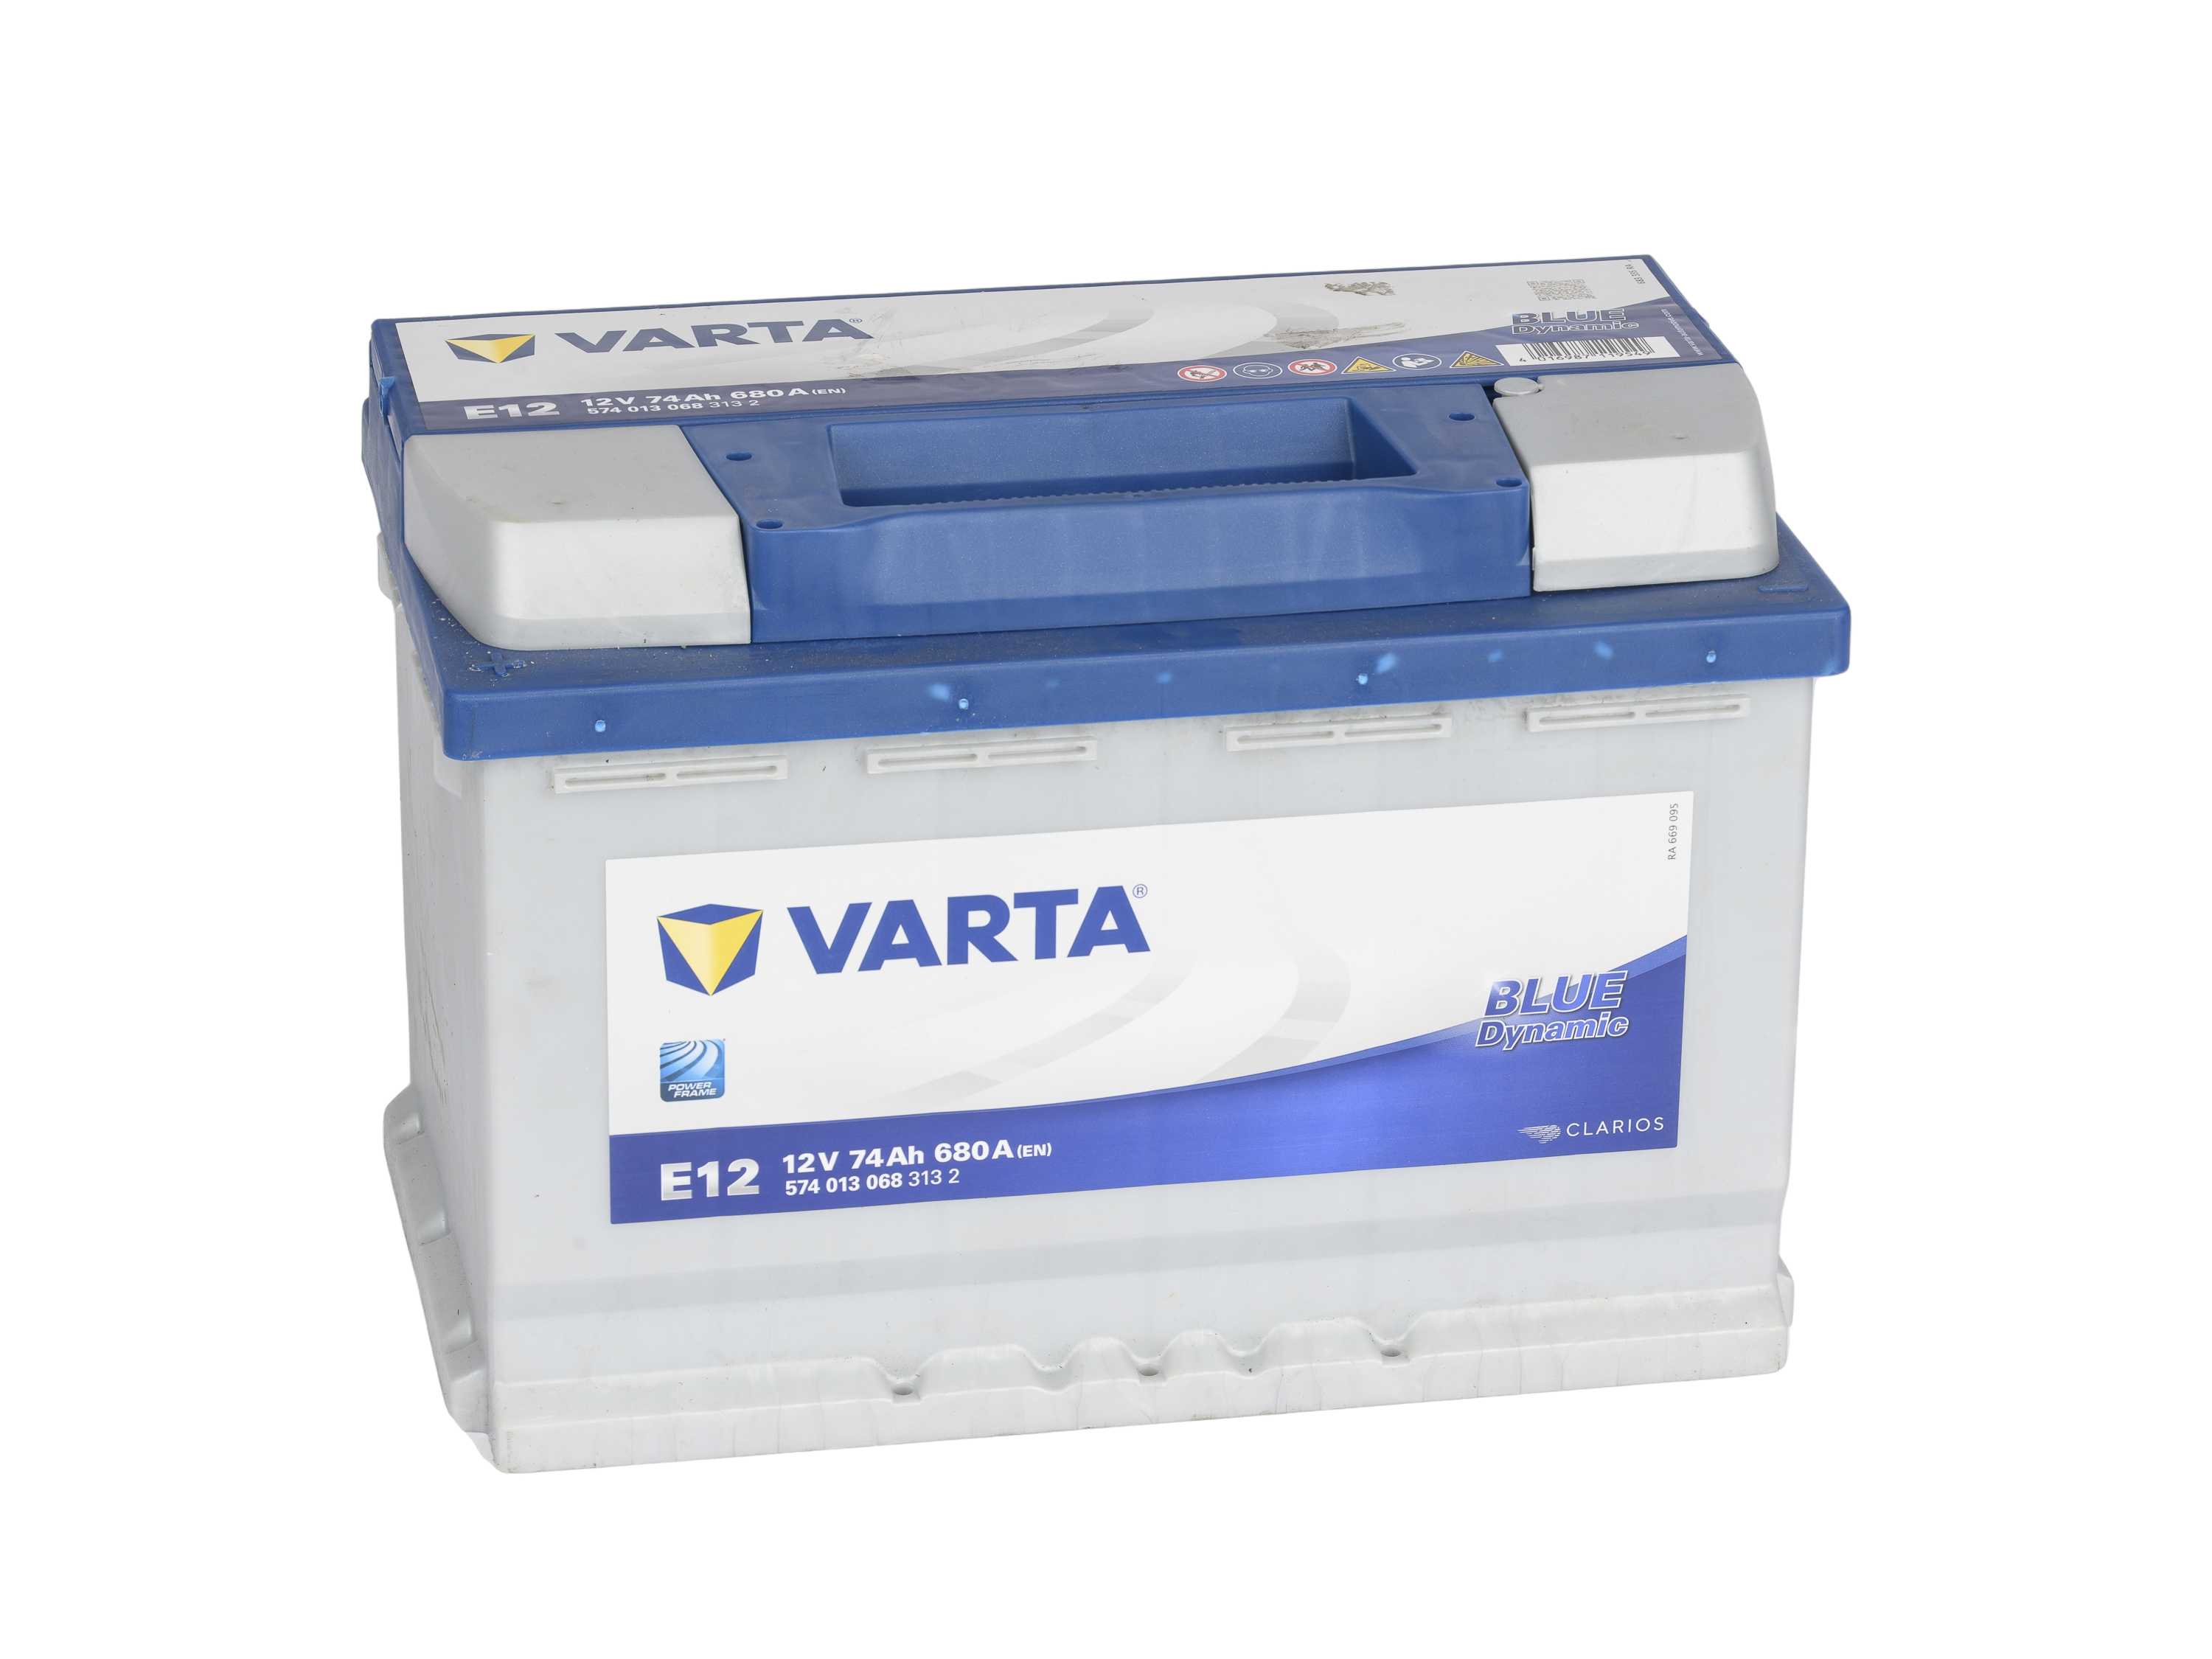 Varta Blue Dynamic Batteri E12 - 12V 74 AH -  574.013.068